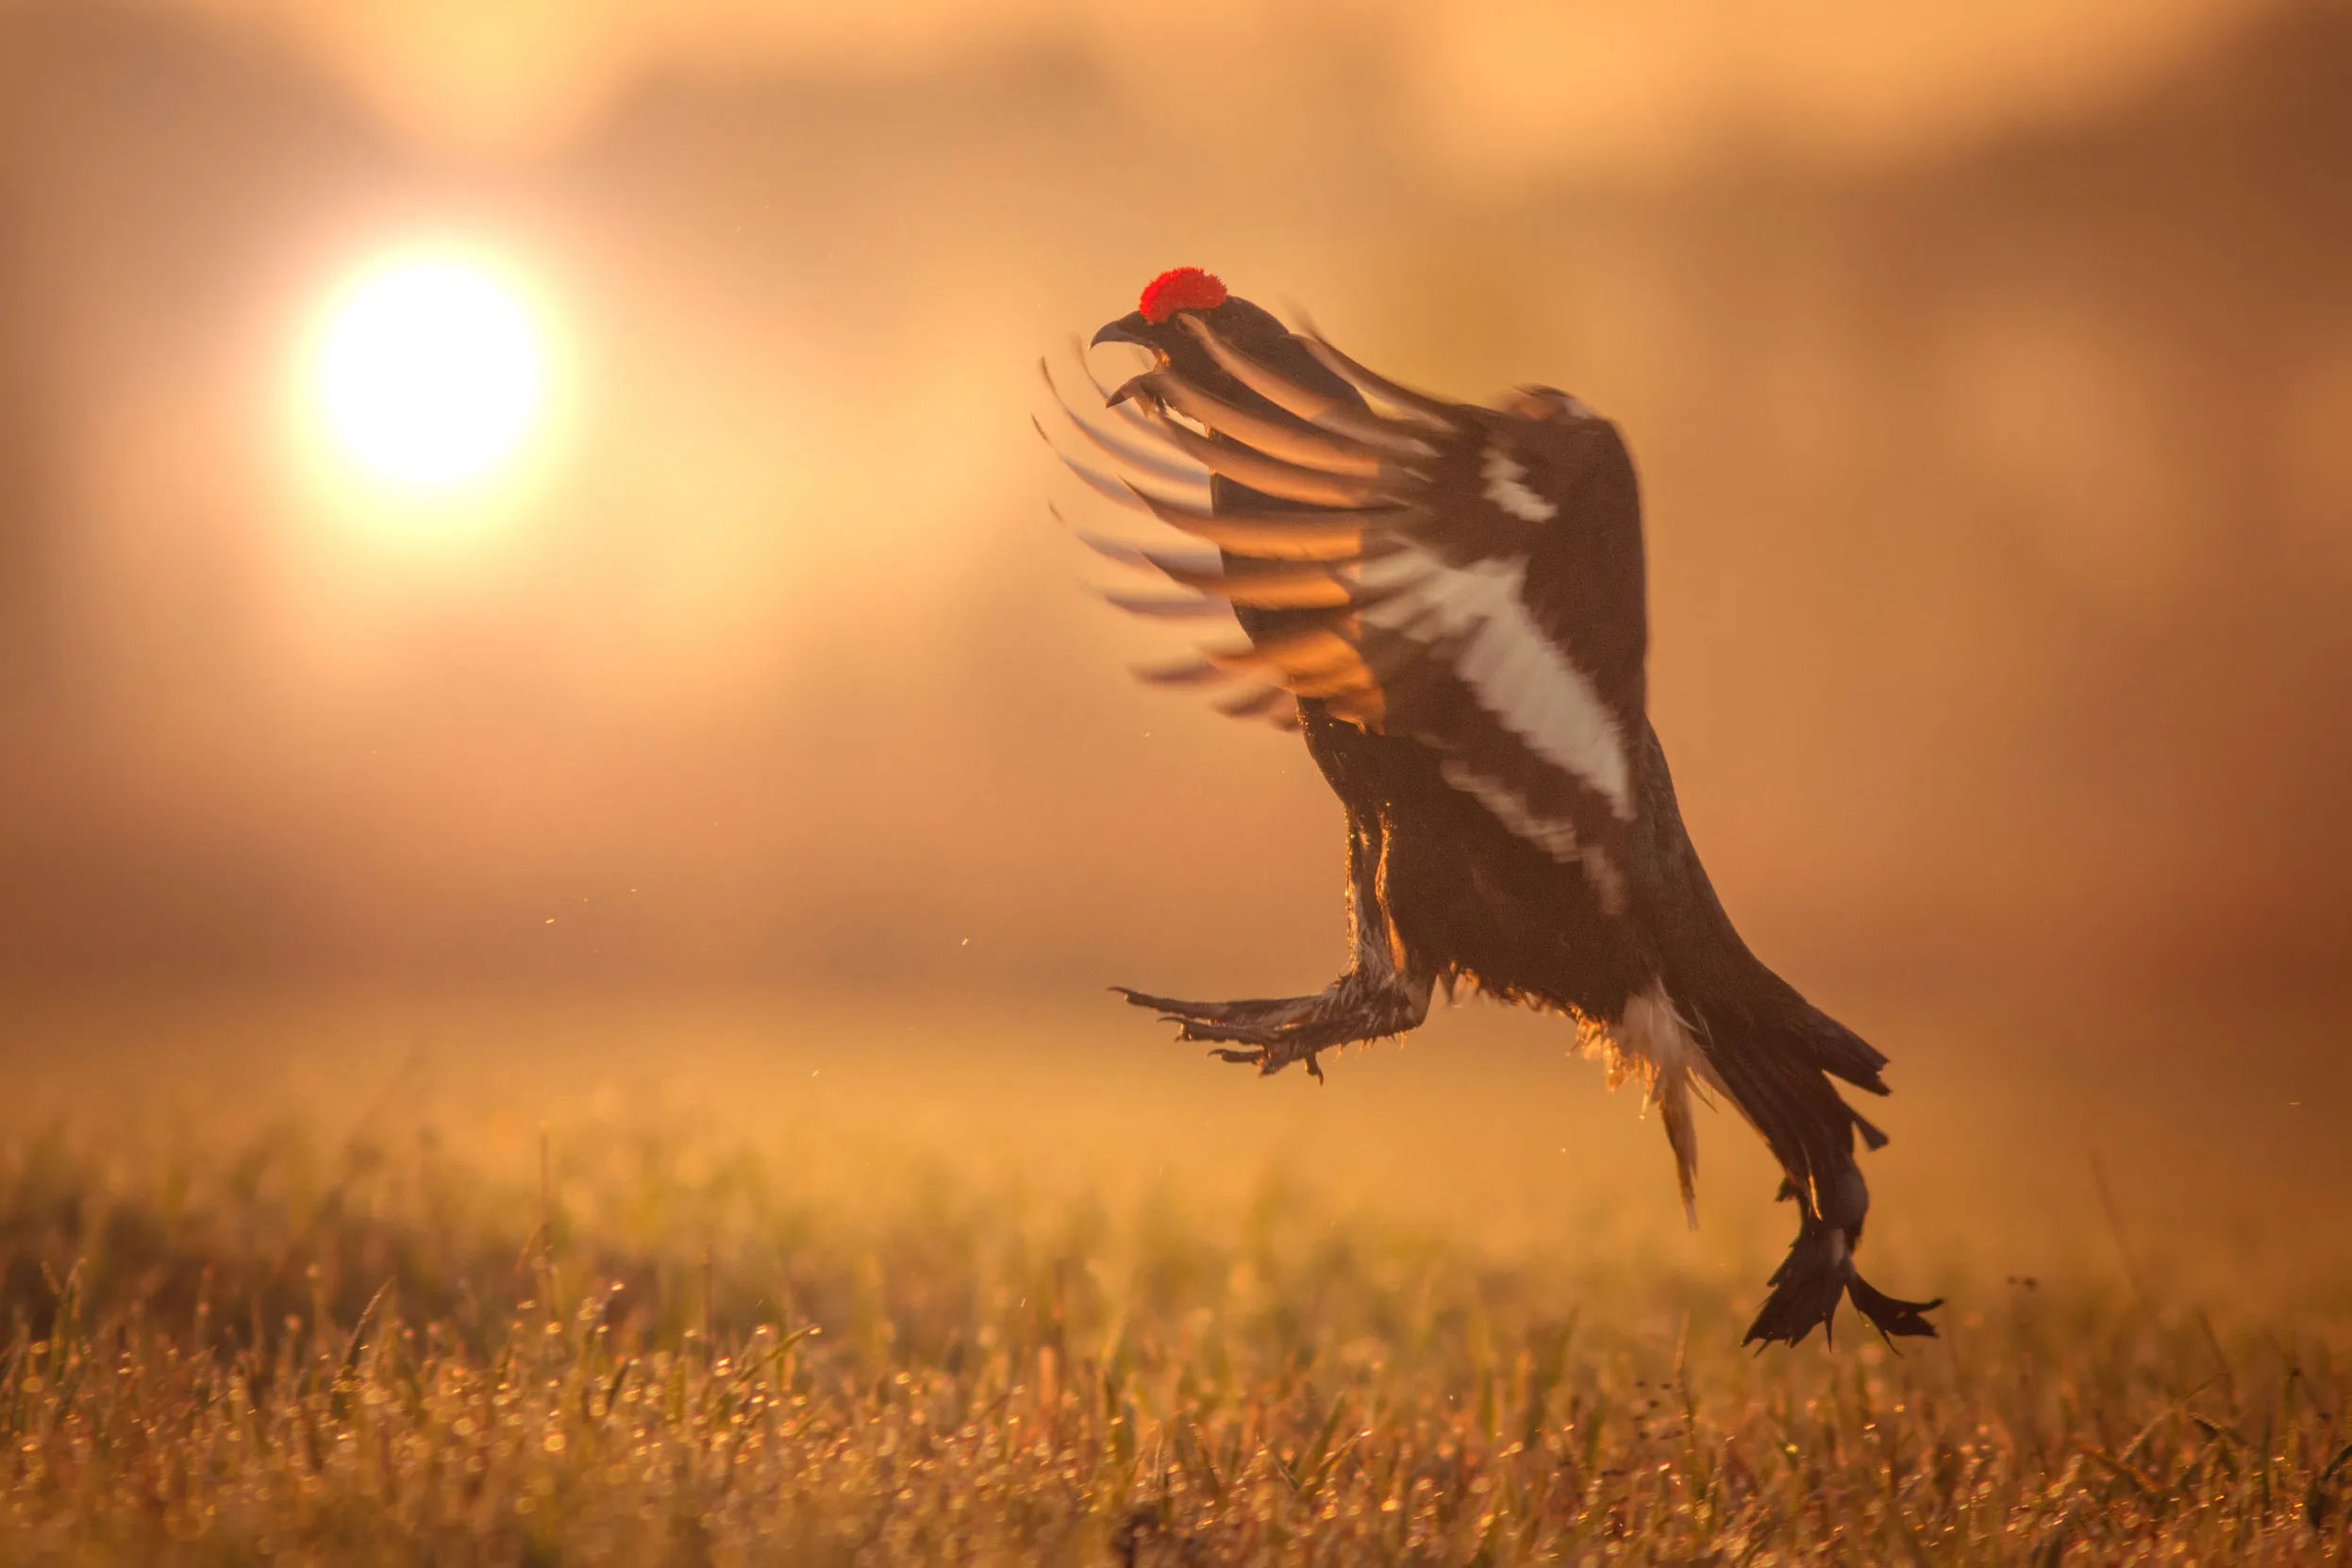 A Black Grouse taking flight at sunrise.